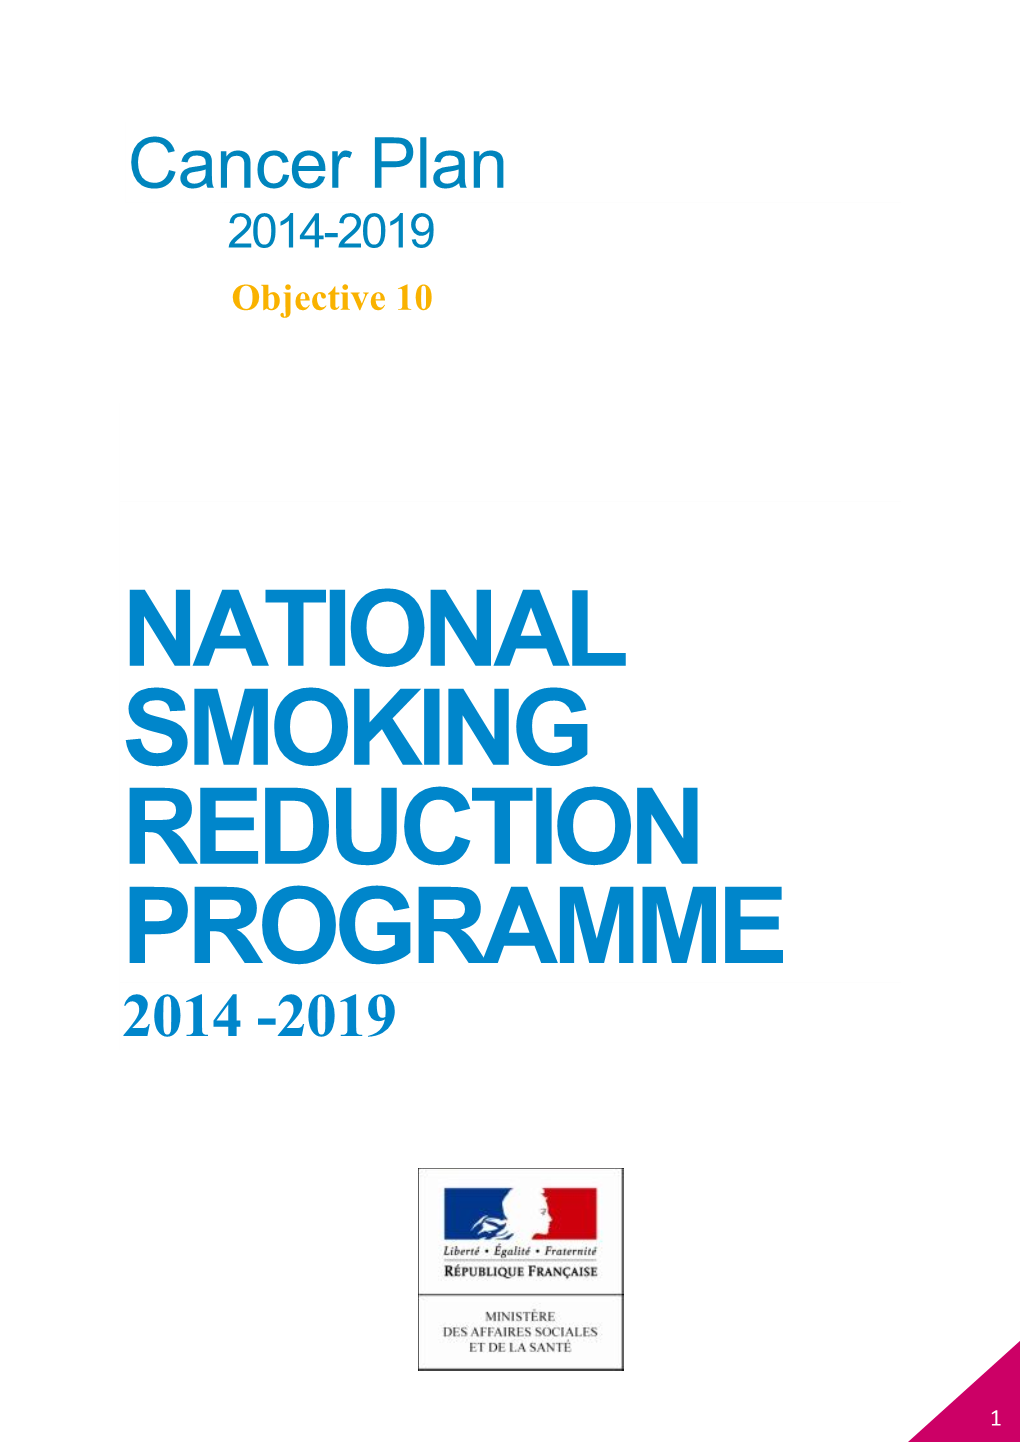 NATIONAL SMOKING REDUCTION PROGRAMME 2014-2019 Foreword